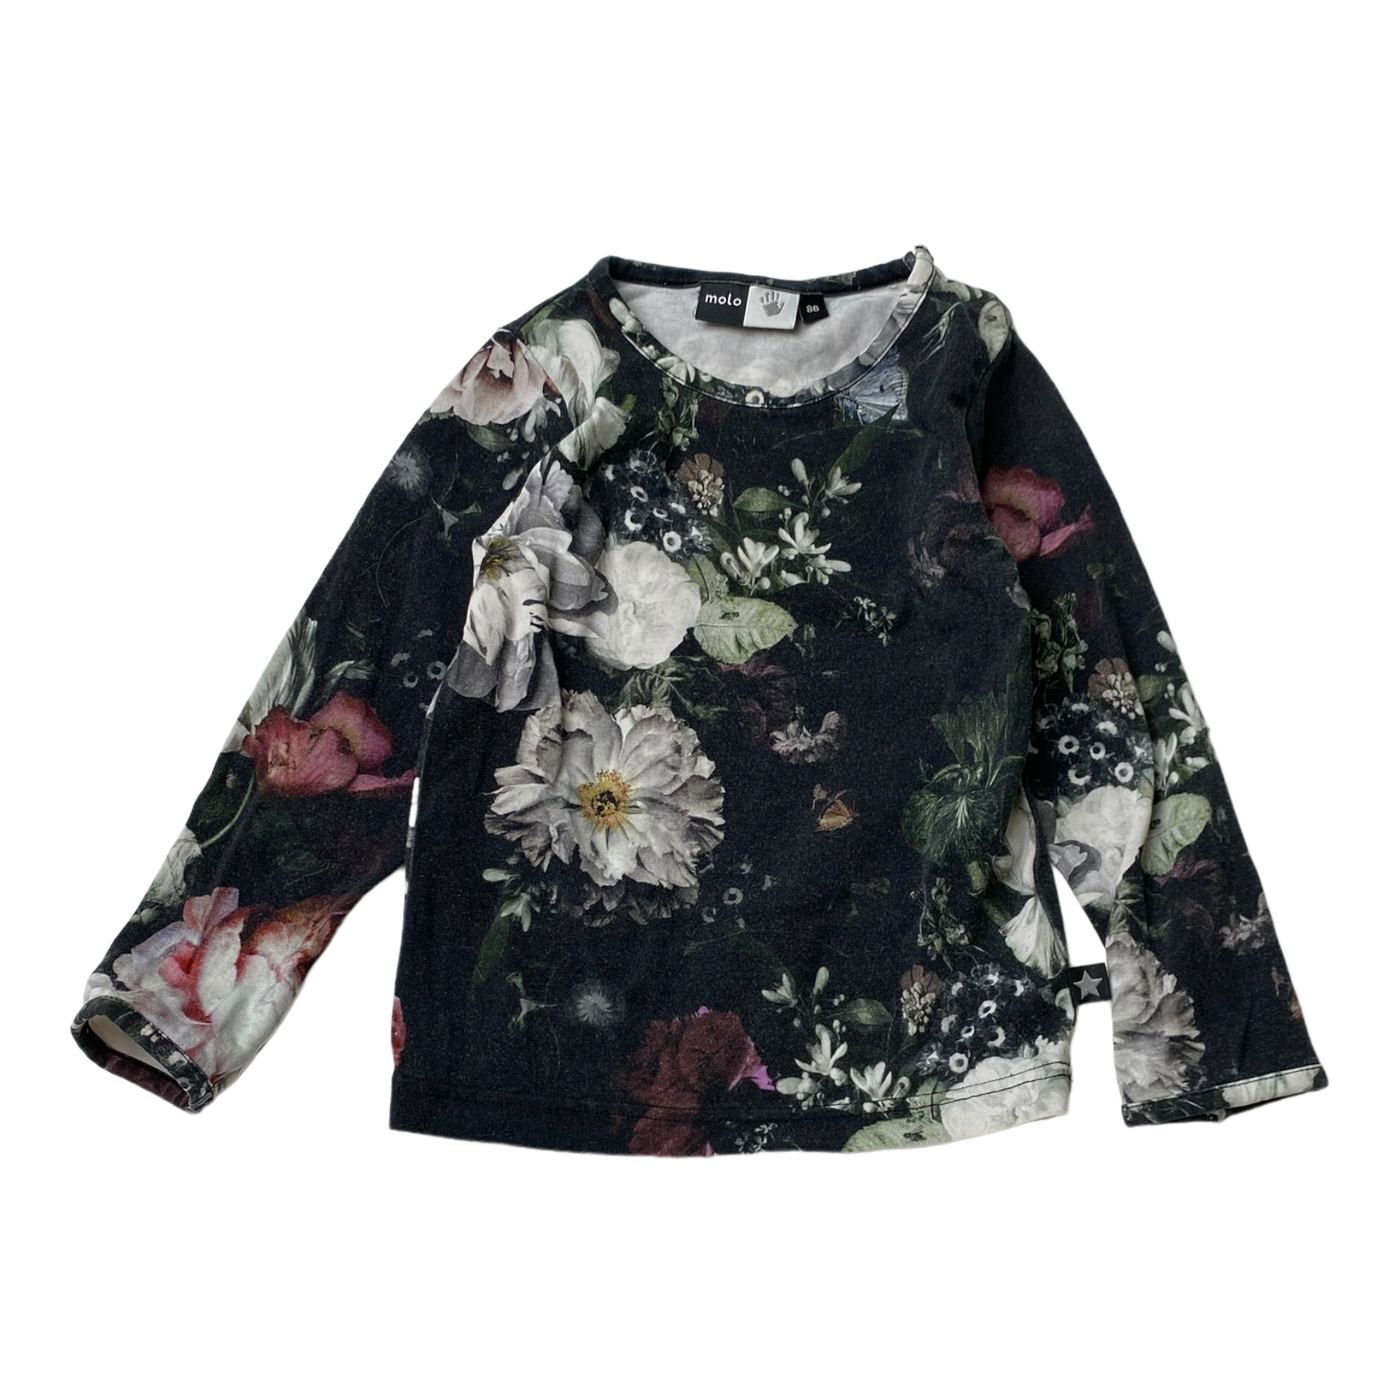 Molo shirt, flowers | 86cm